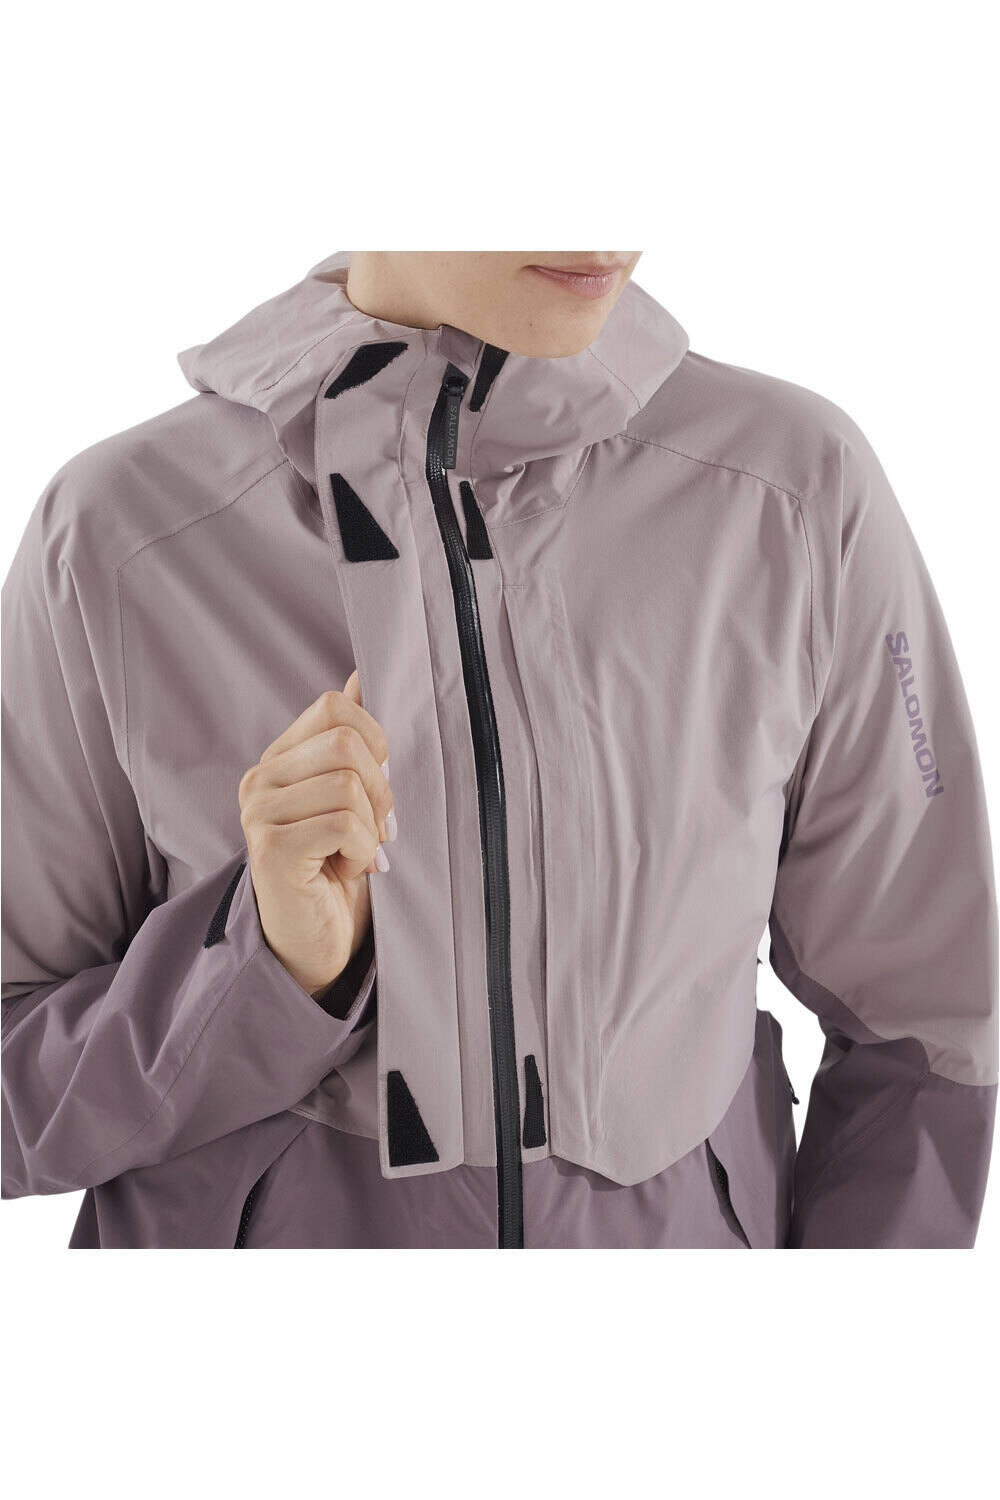 Salomon chaqueta impermeable mujer OUTERPATH WP JKT PRO W vista detalle